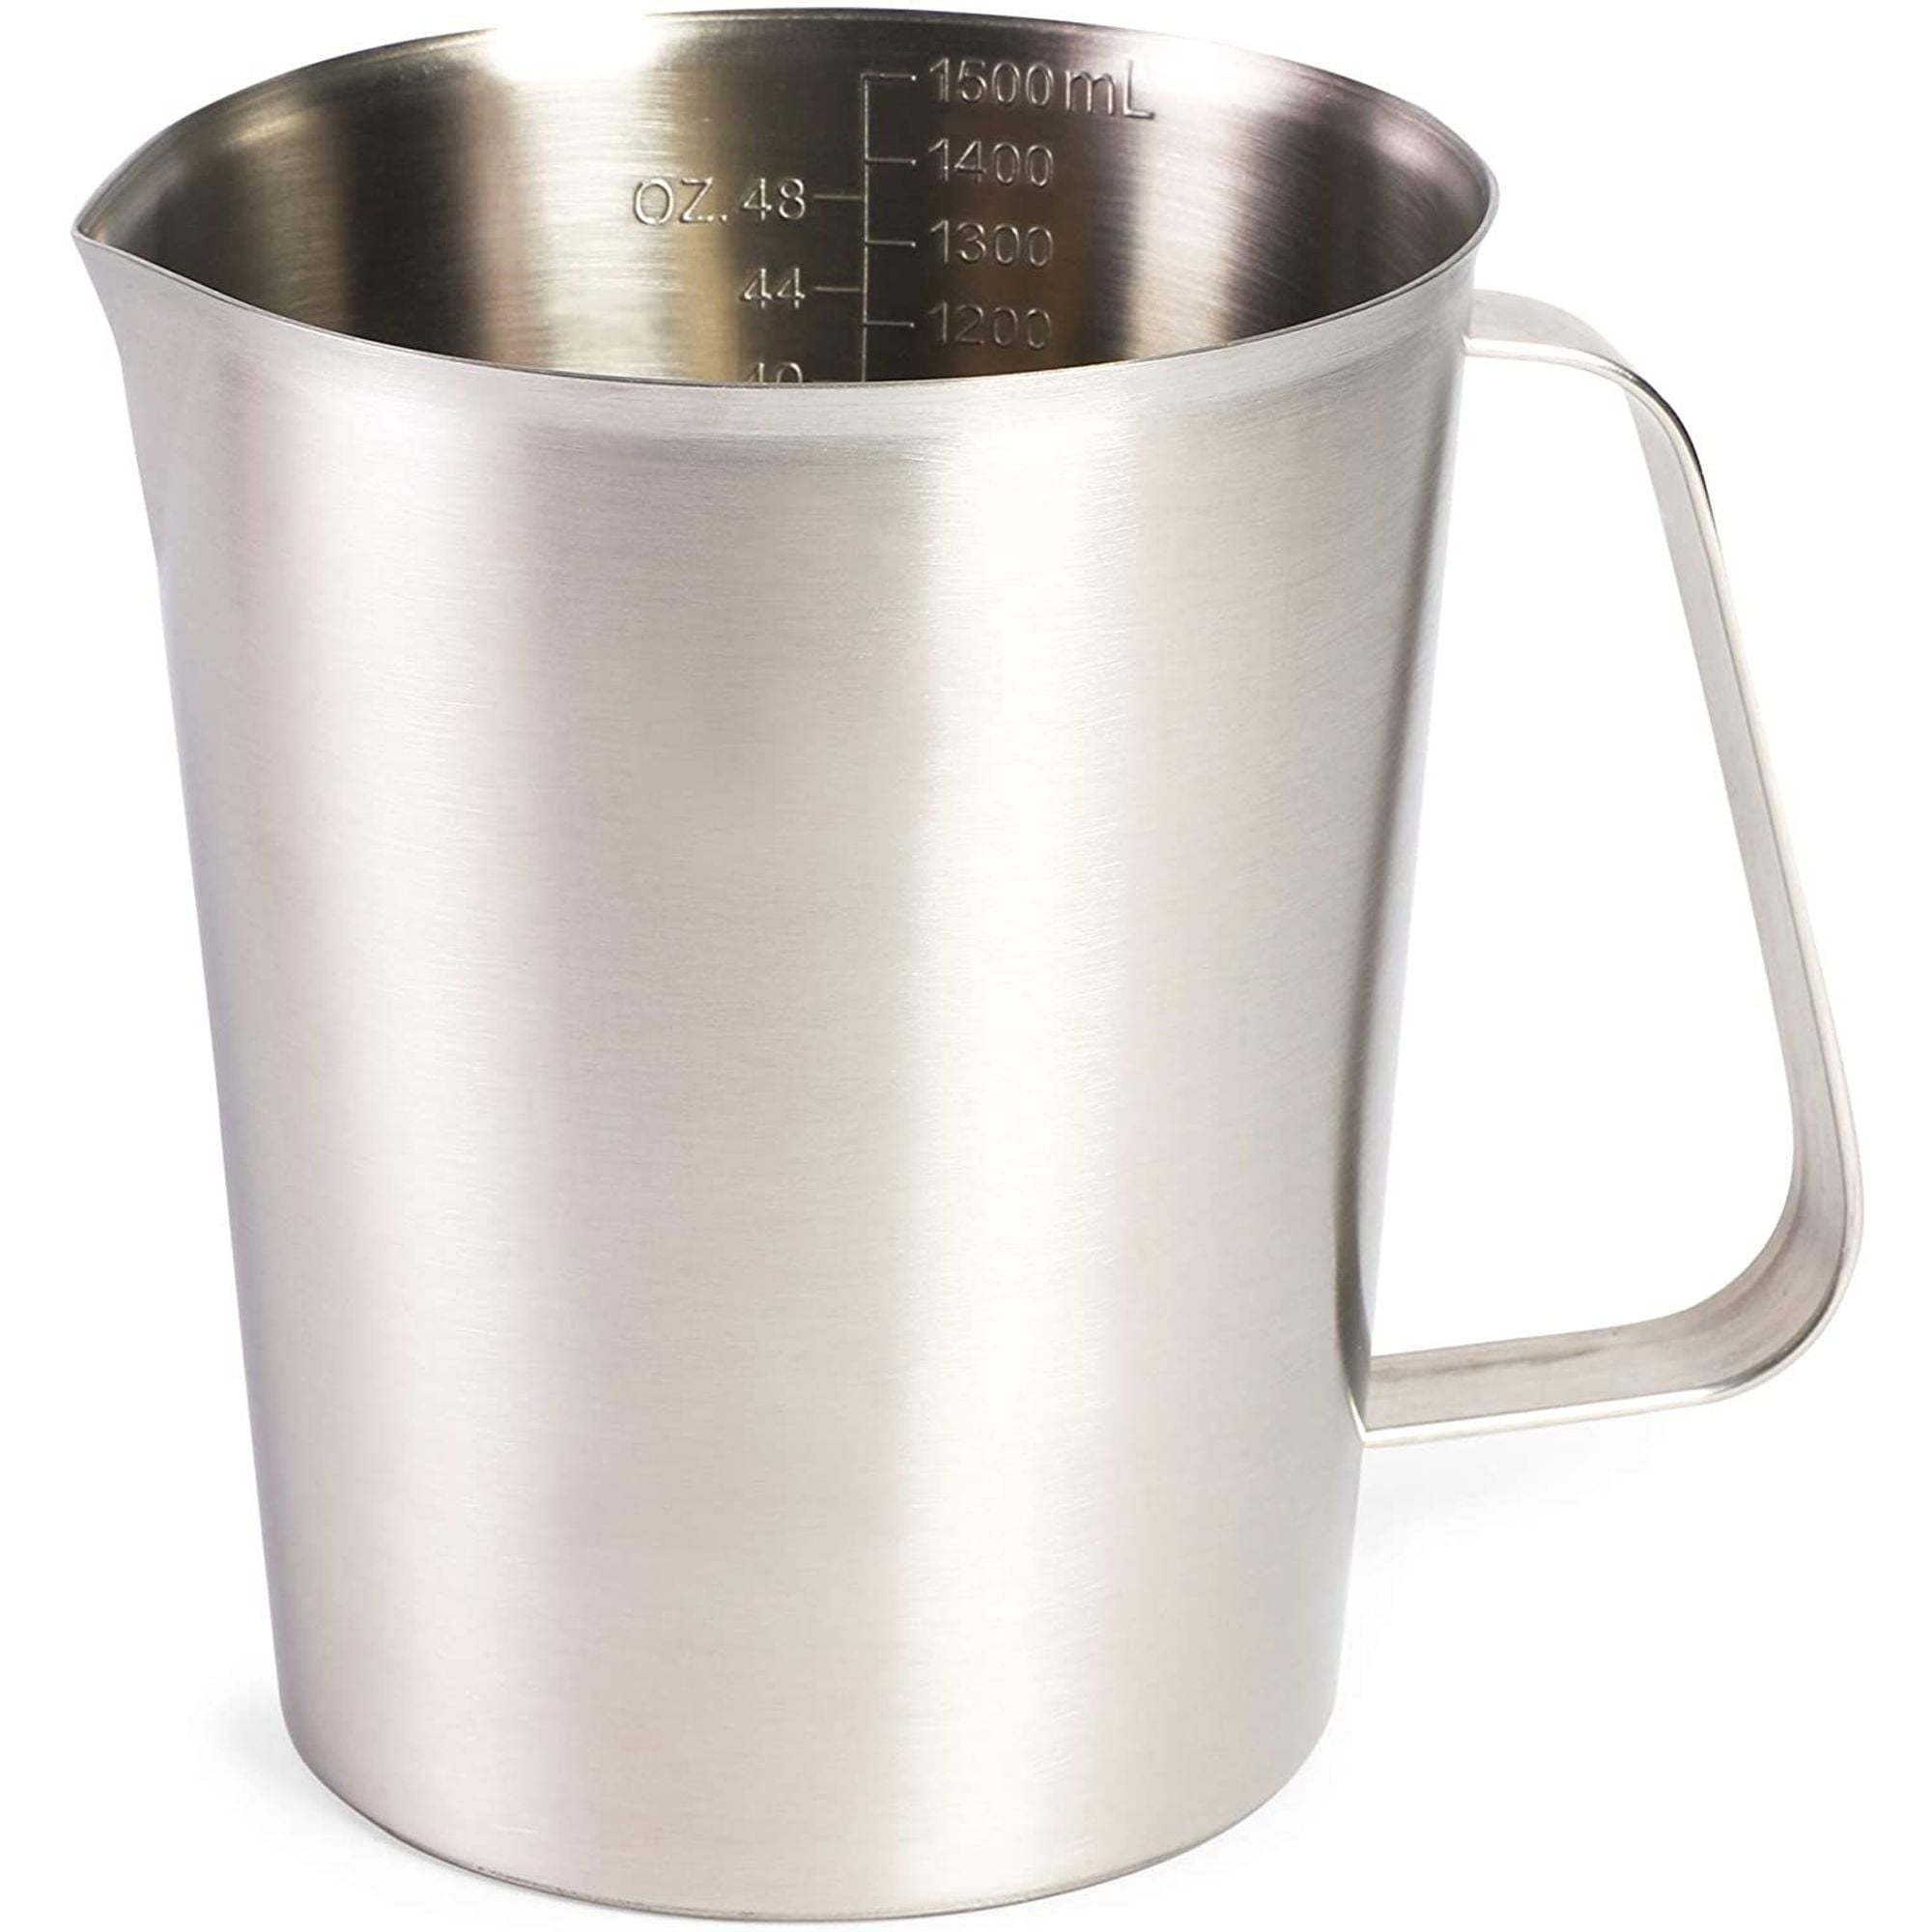 cups in a liter